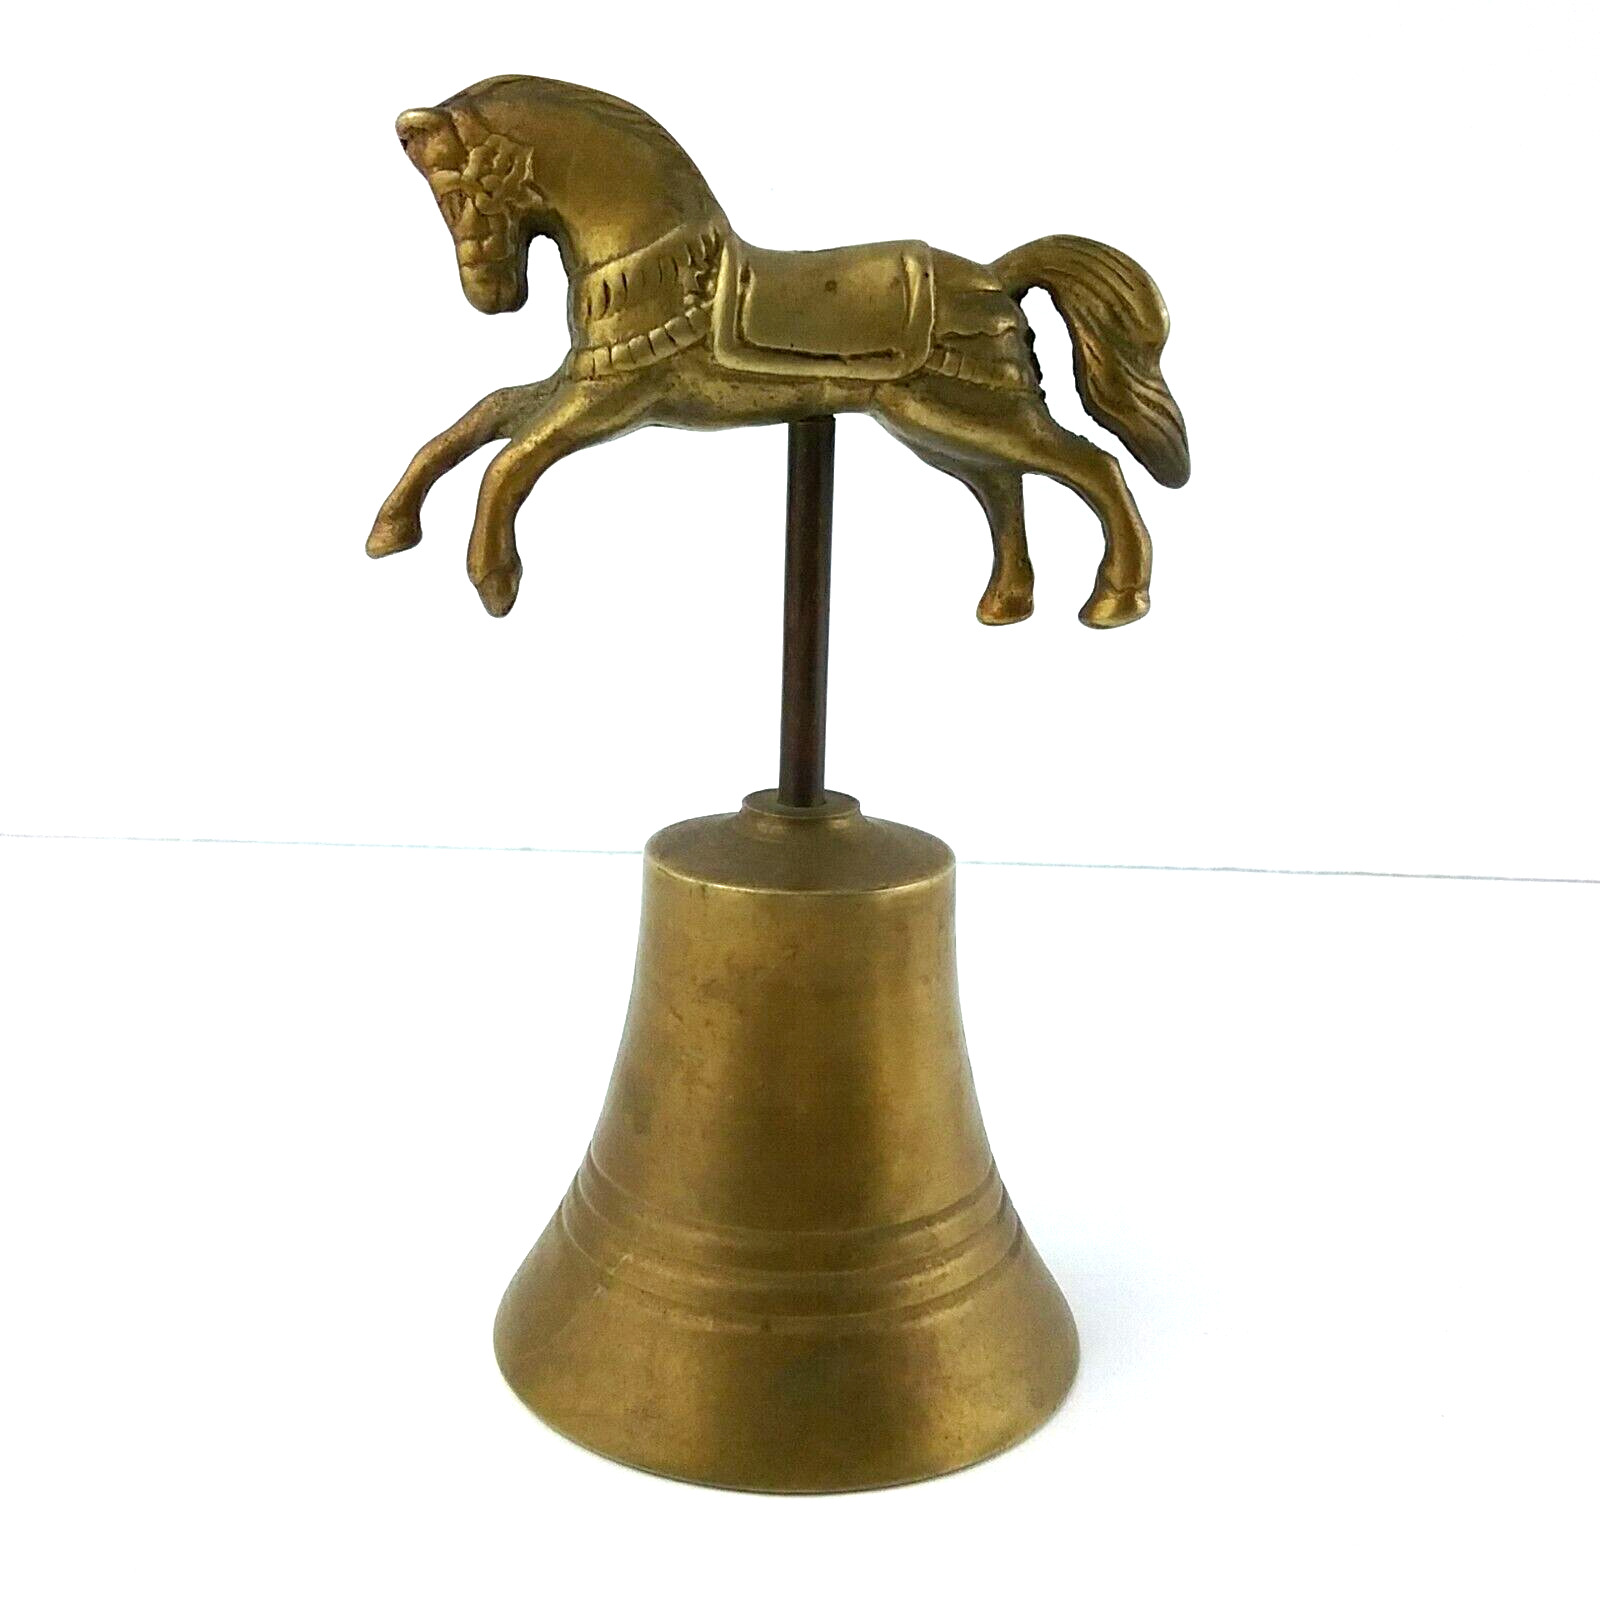 Brass Hand Bell Carnival Horse Engraved Details Vintage Metal Décor Handcrafted